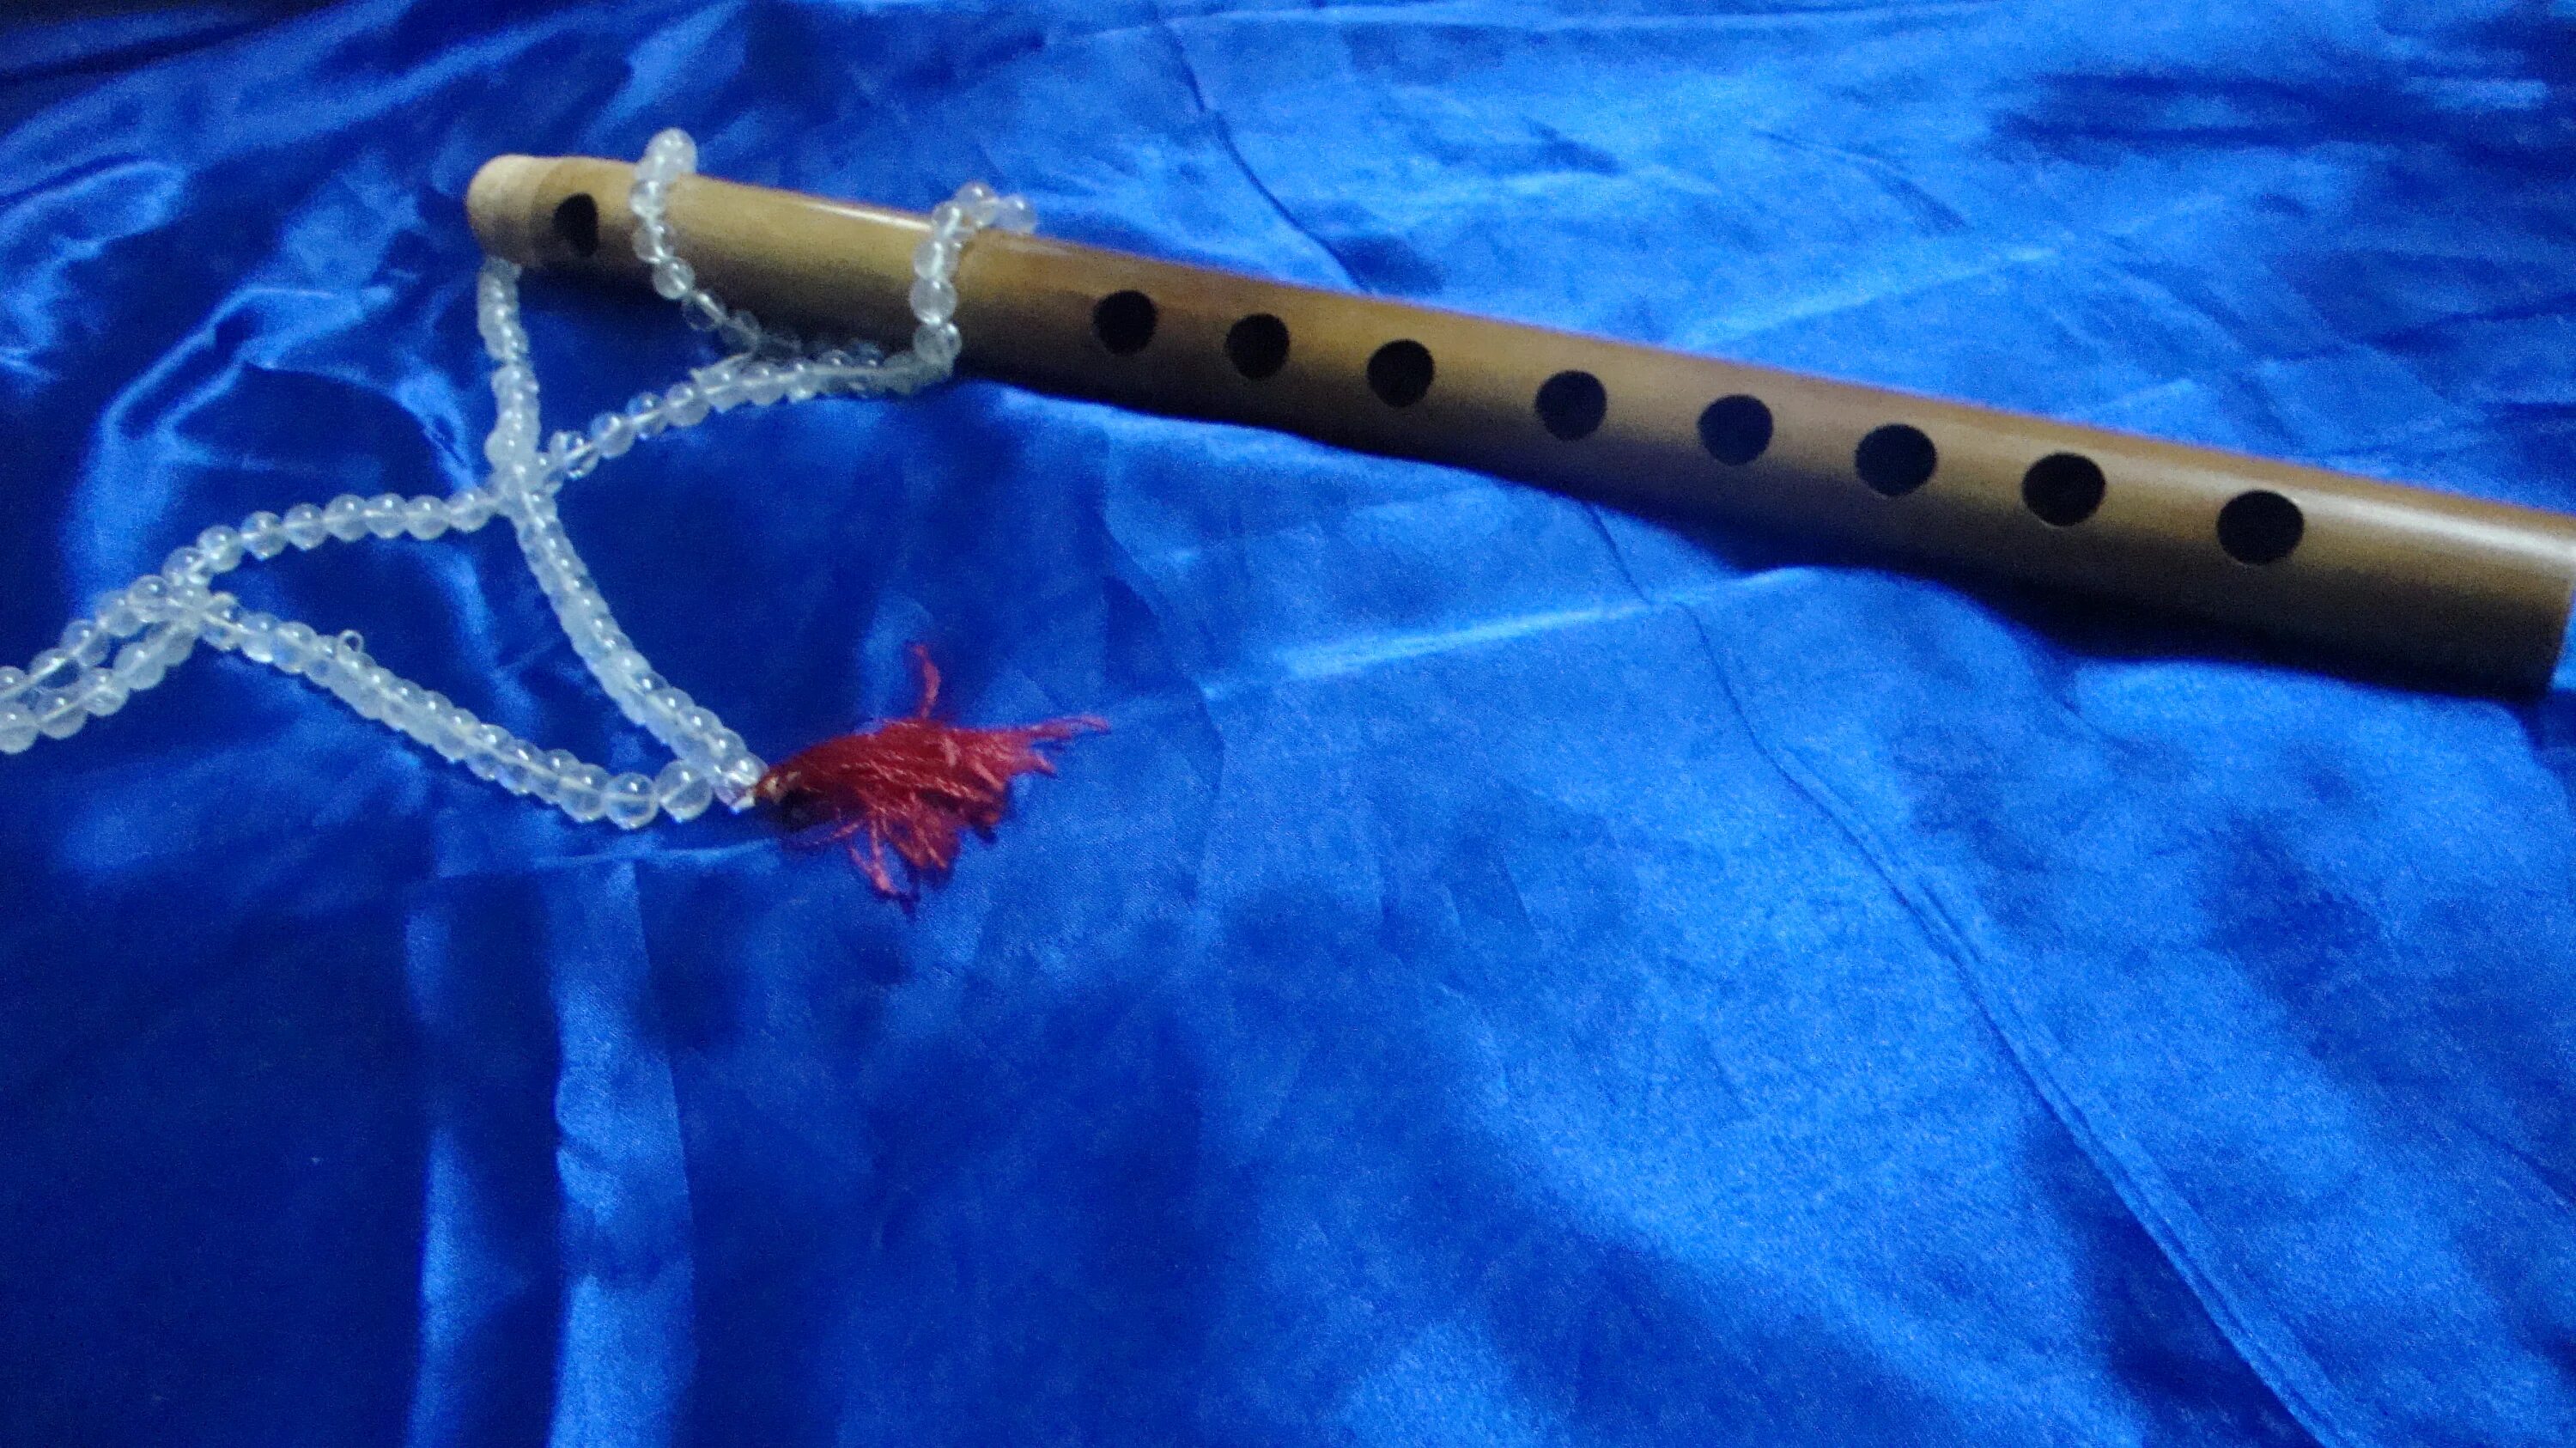 Музыка музыкальная флейта. Файф флейта. Индийская флейта. Халиль флейта. Файф музыкальный инструмент.